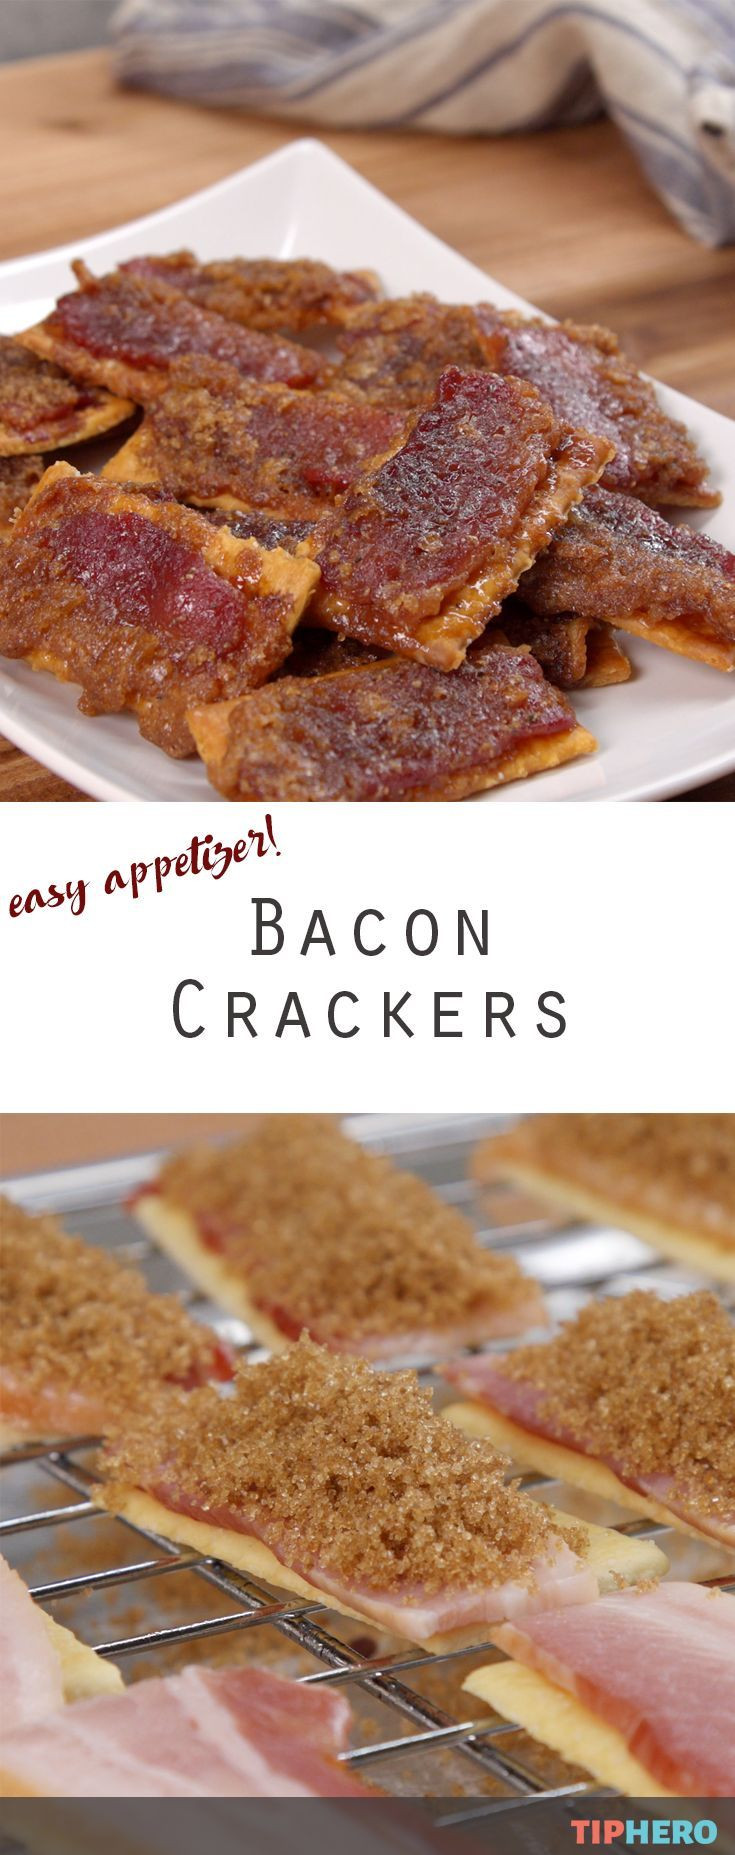 Bacon Appetizers Pioneer Woman
 pioneer woman bacon crackers